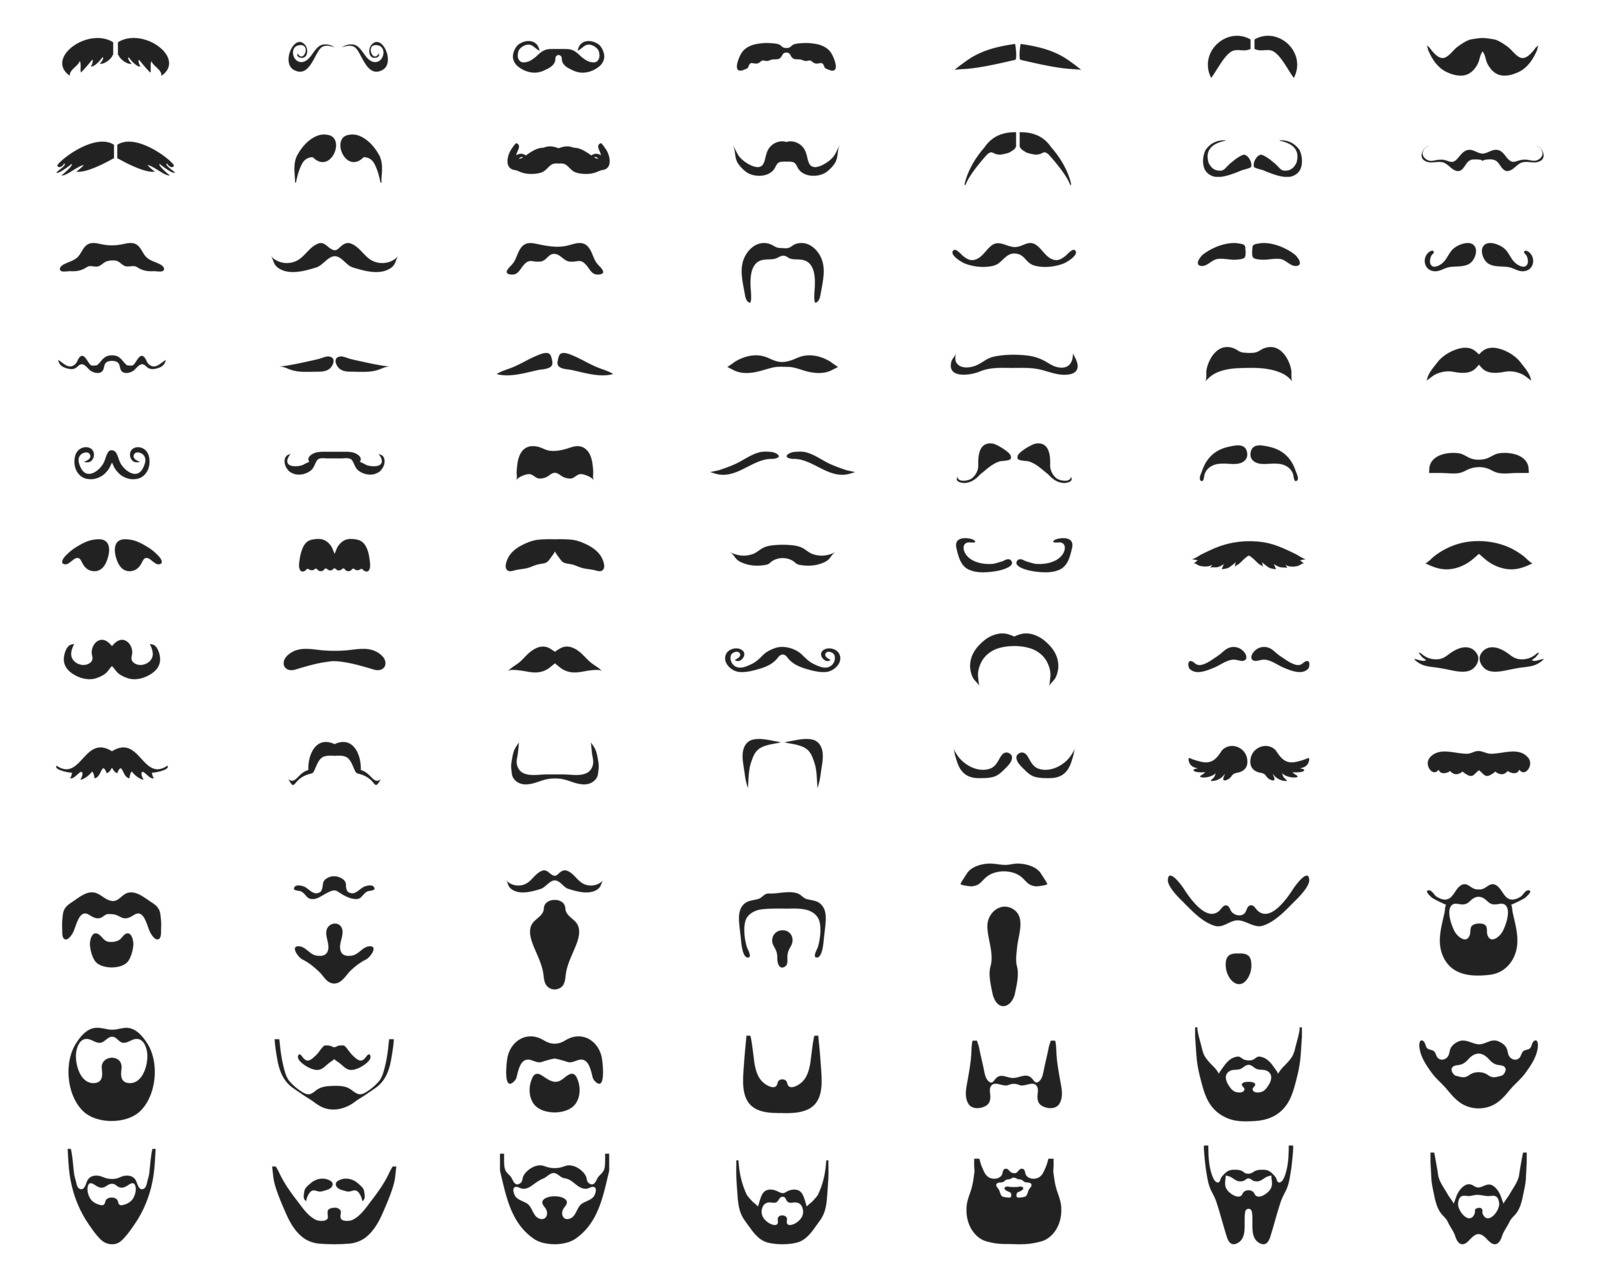 beards and mustache by ratkomat